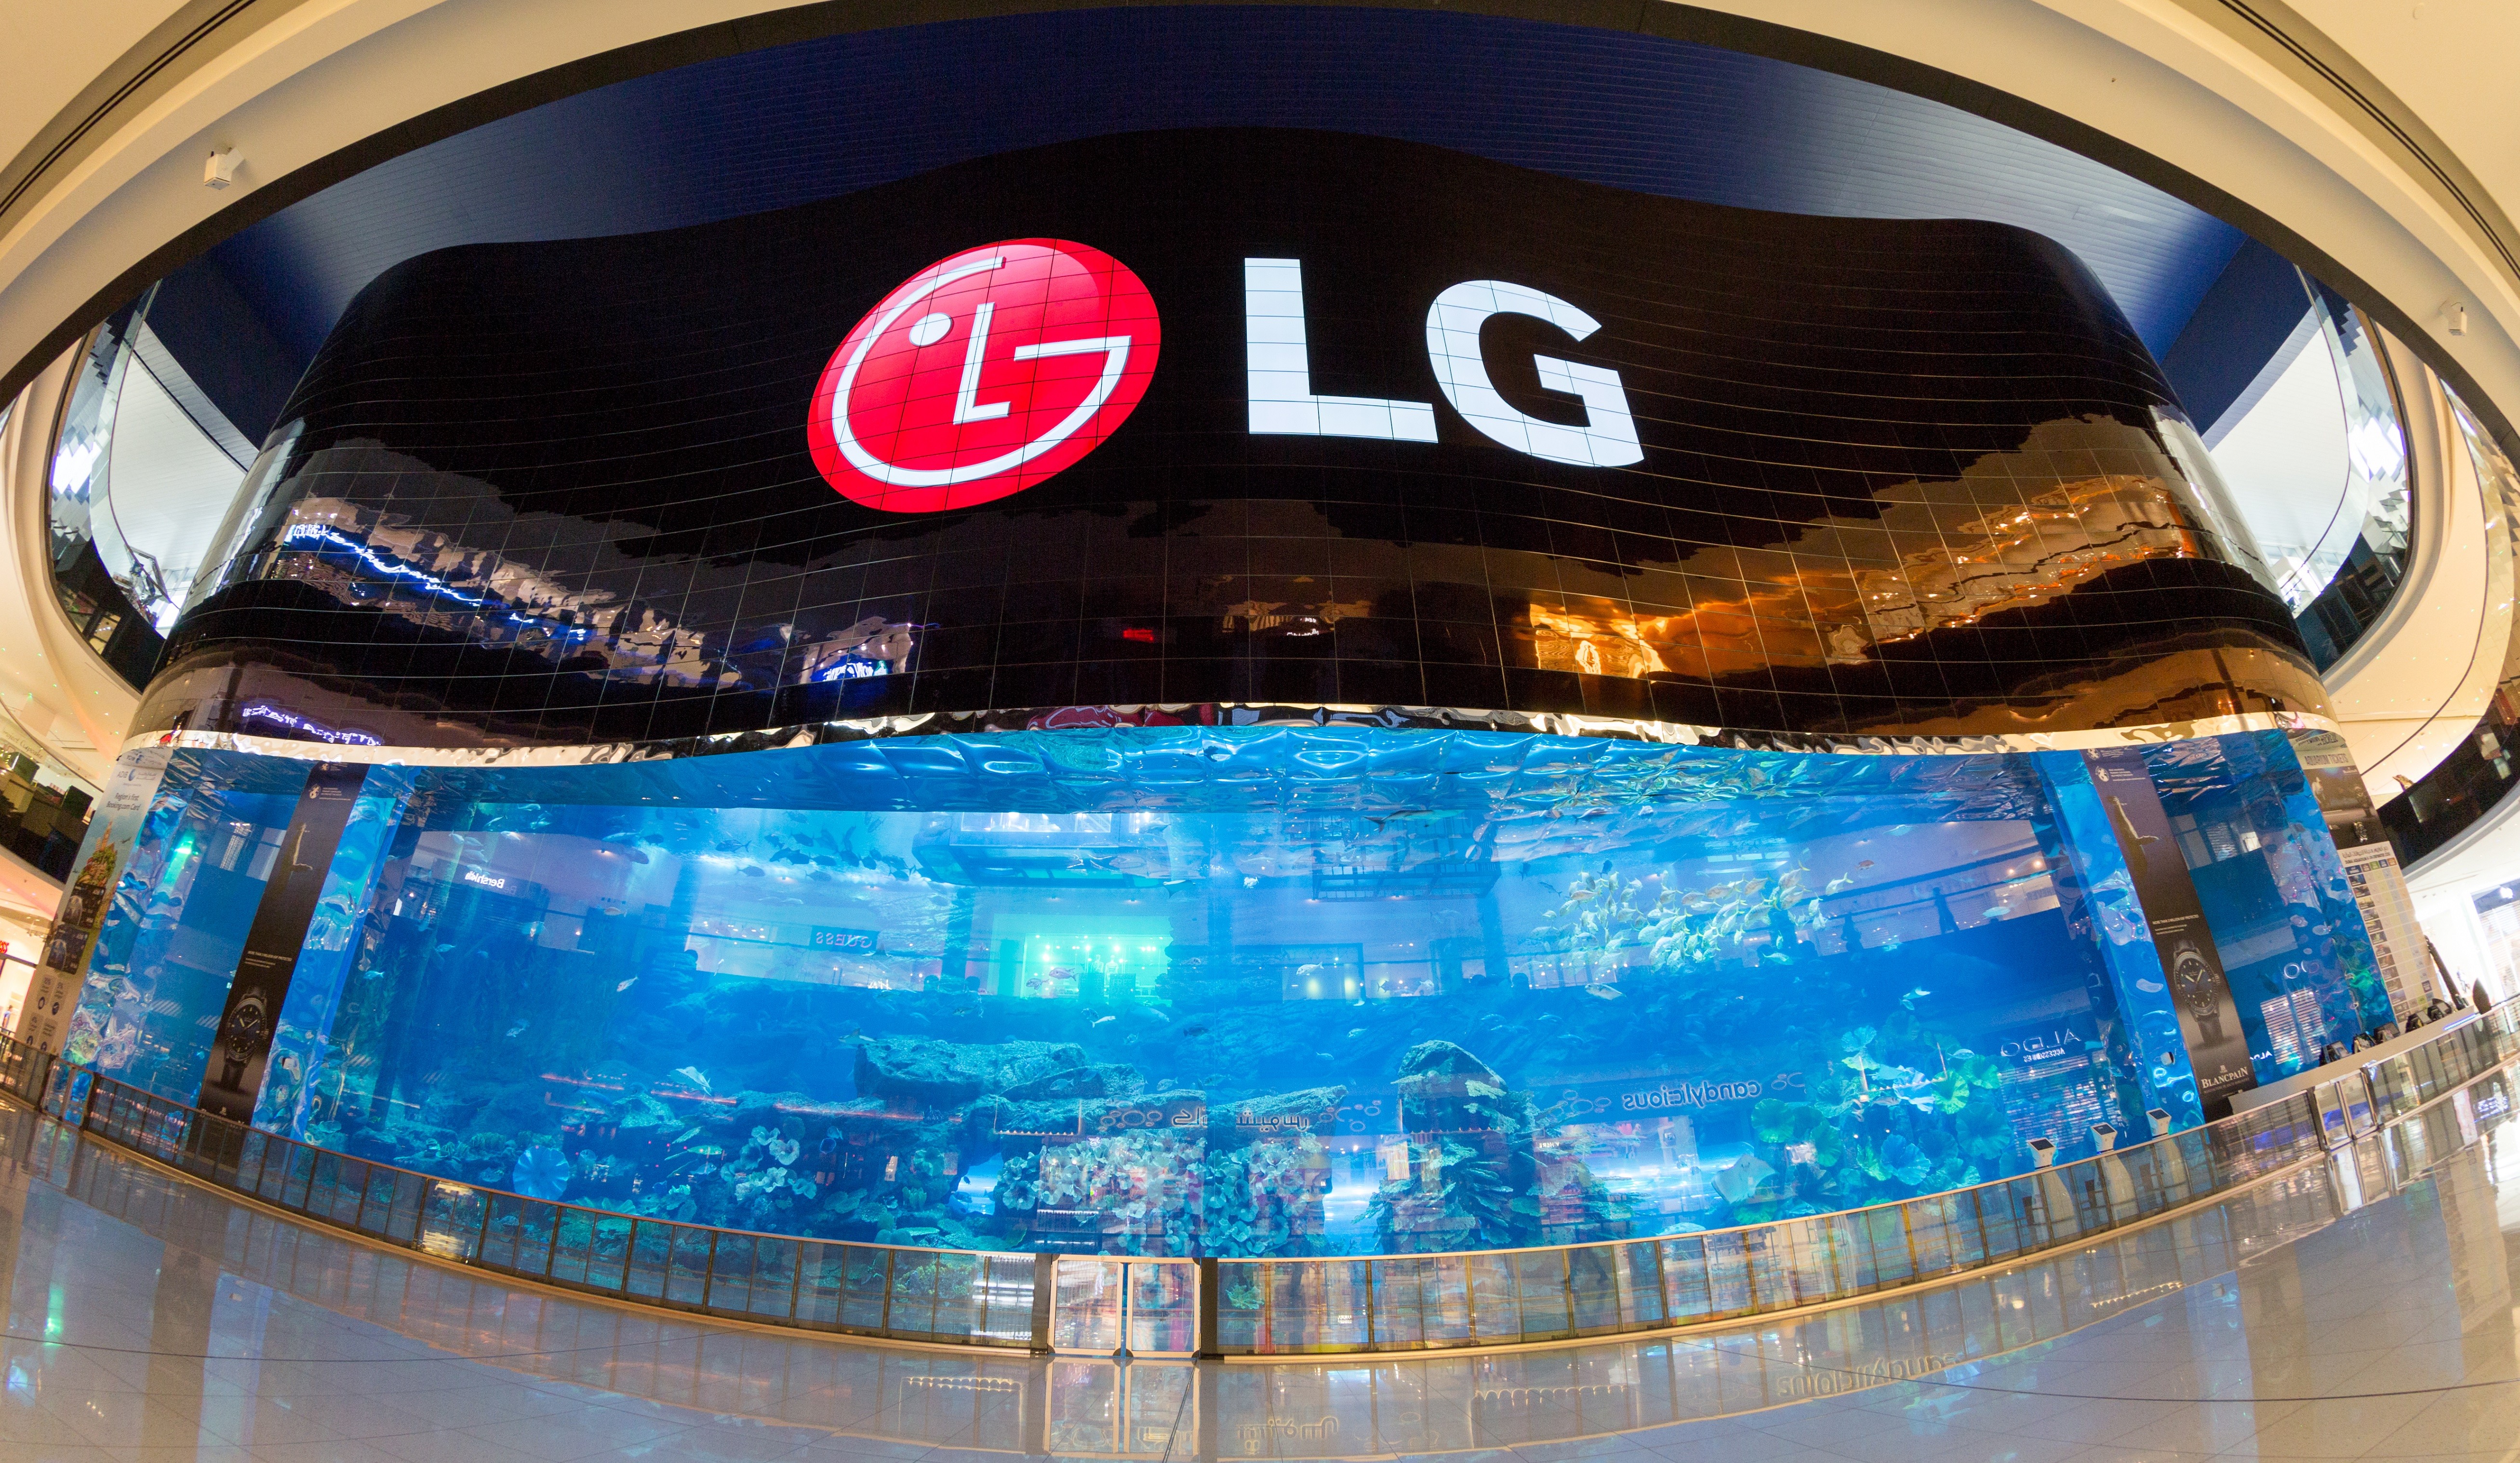 A gigantic LG OLED video wall signage displaying the logo of LG at the Dubai Aquarium.